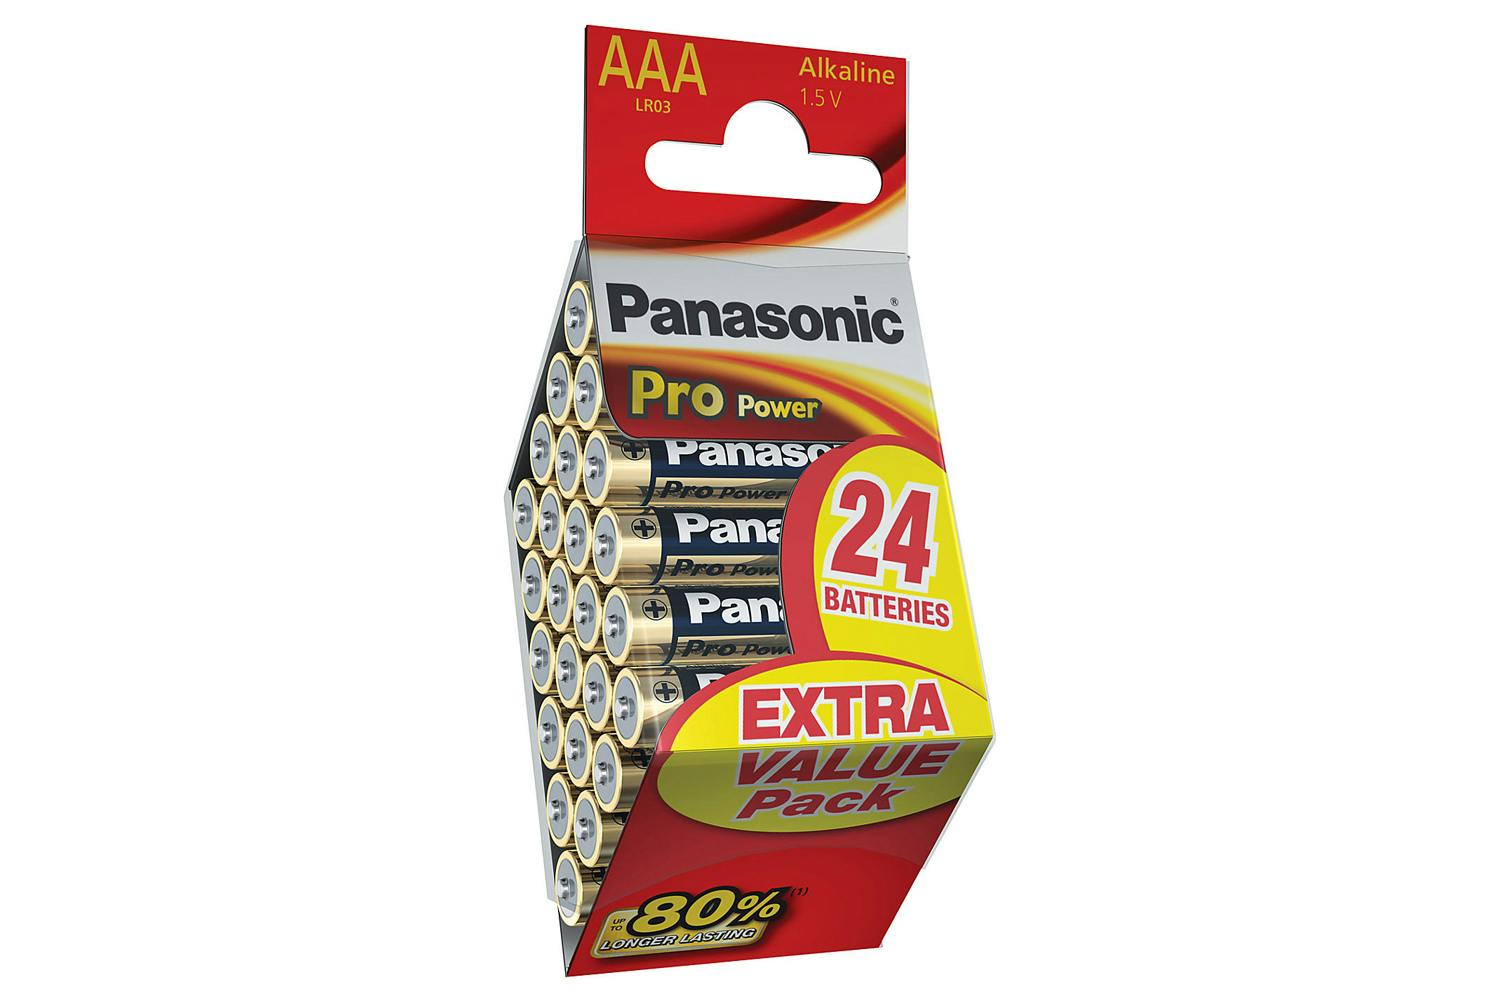 Panasonic AAA Batteries Pro Power | 24 Pack